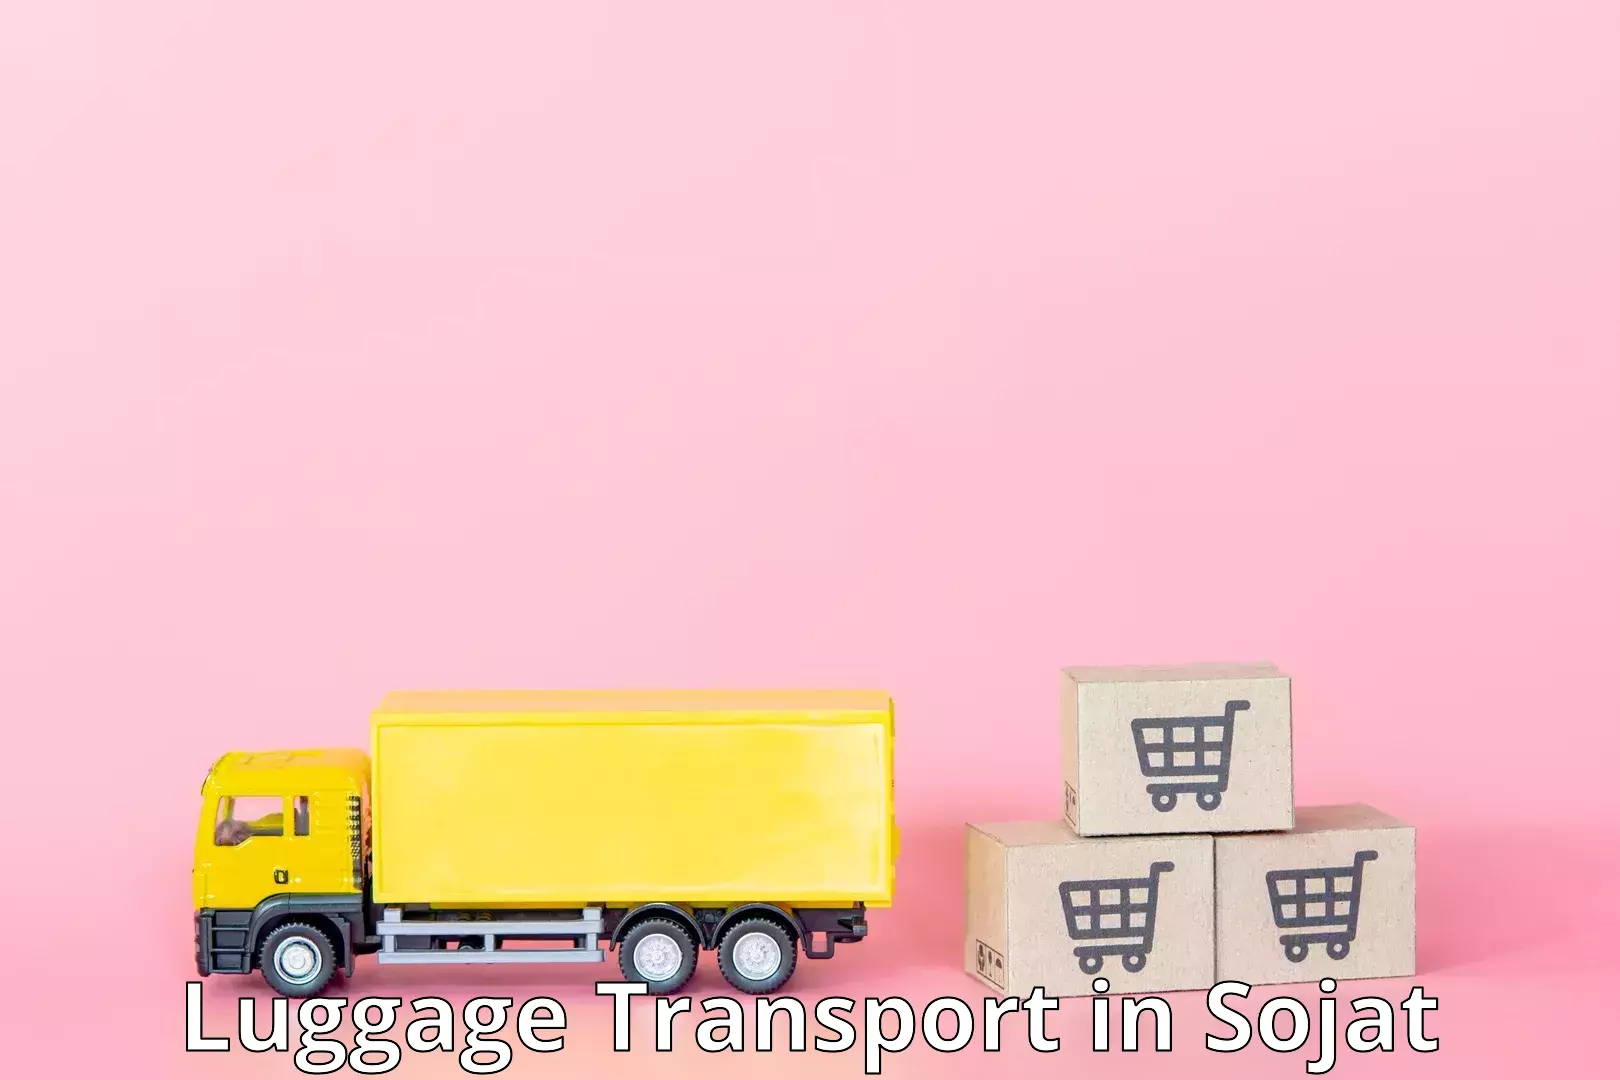 Professional baggage transport in Sojat